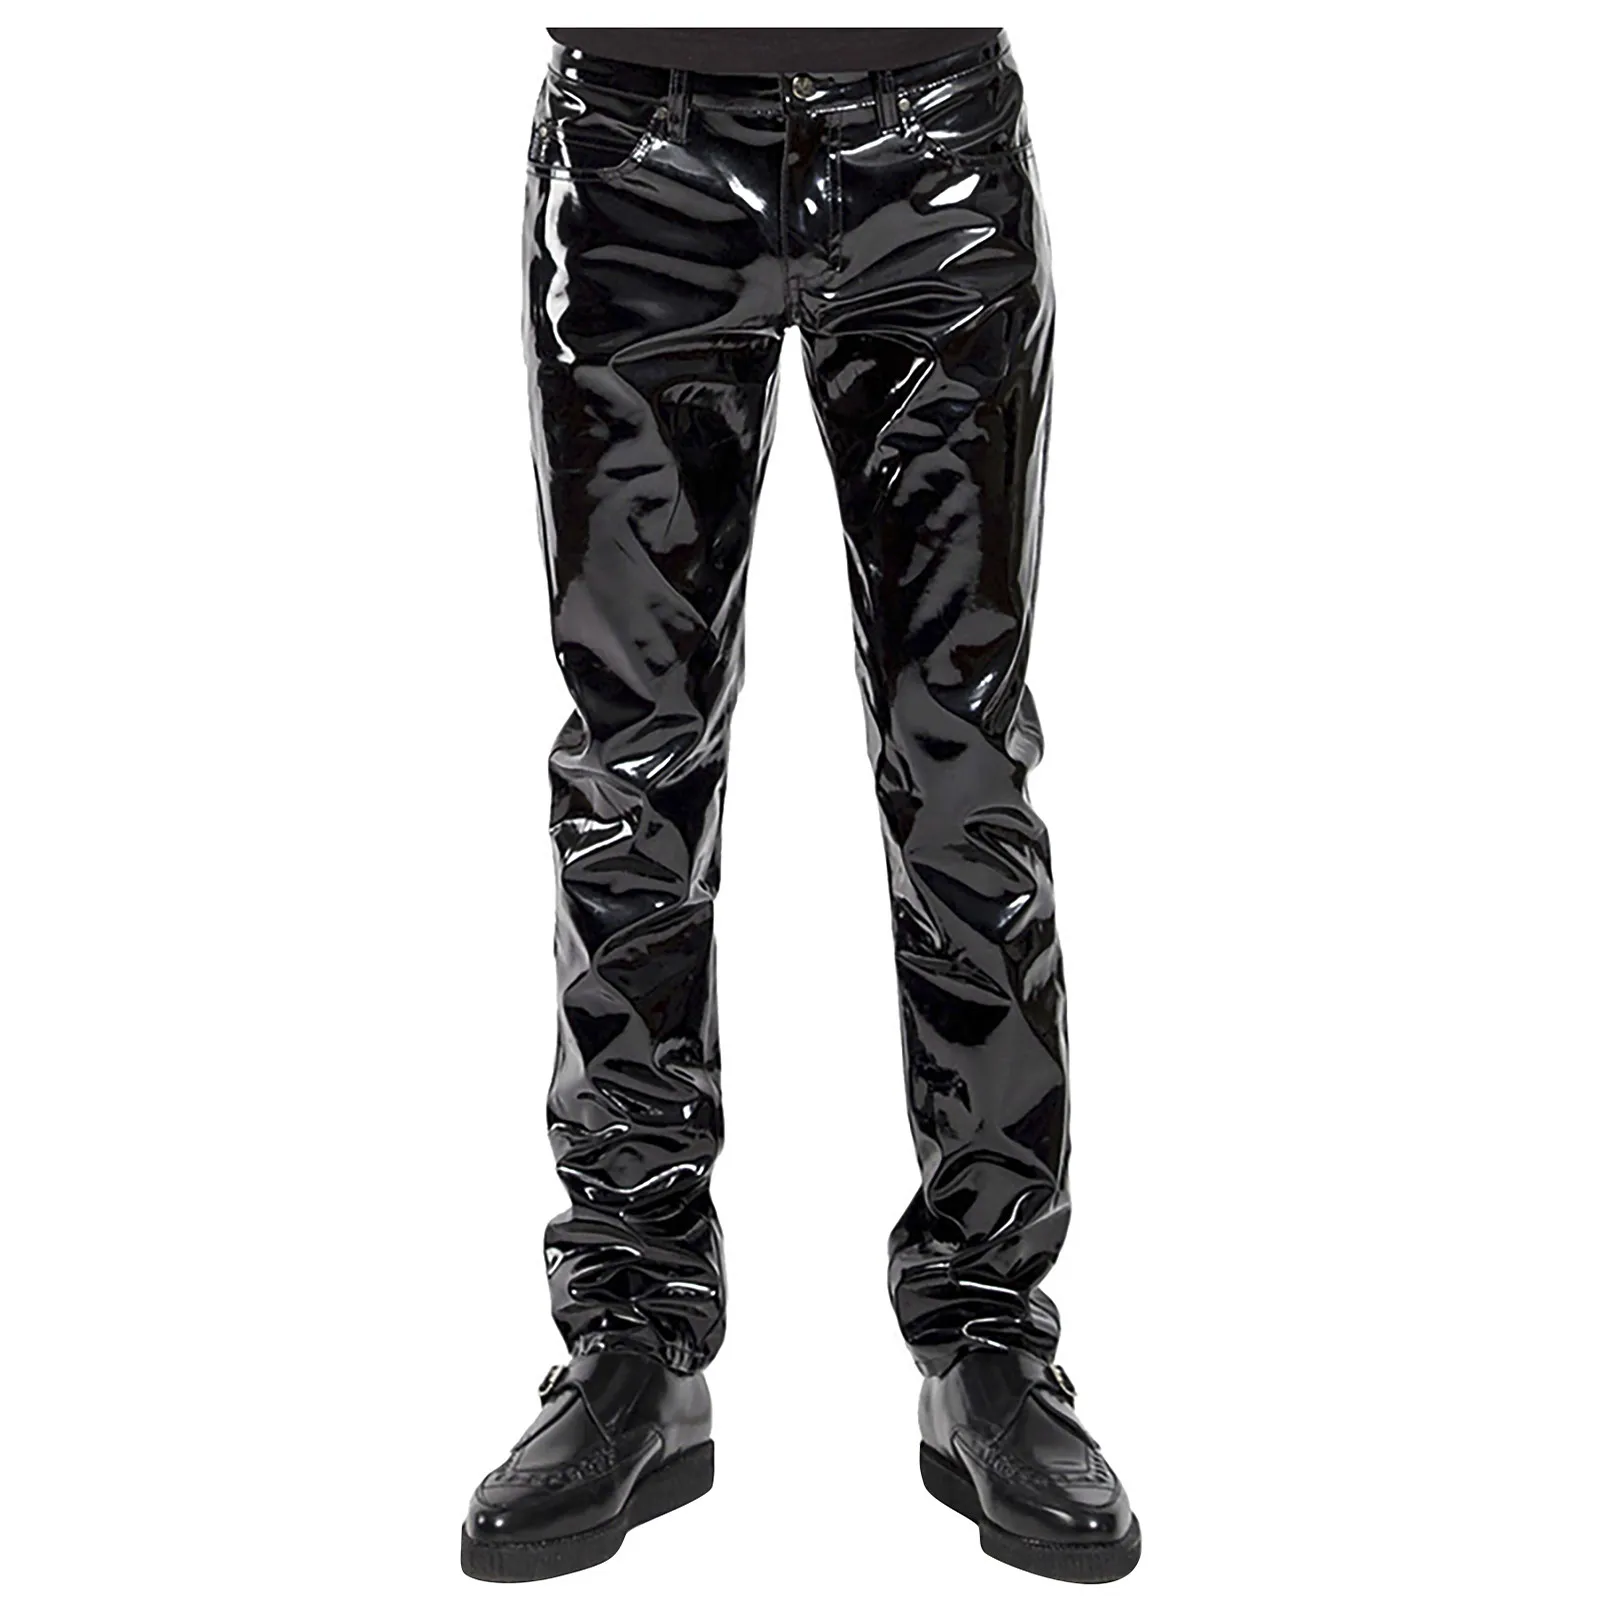 Erkek Sonbahar kış pantolonları Punk Retro Goth İnce Rahat Uzun pantolon Suni Deri Moda Rahat Düz renk pantolon kalem pantolon